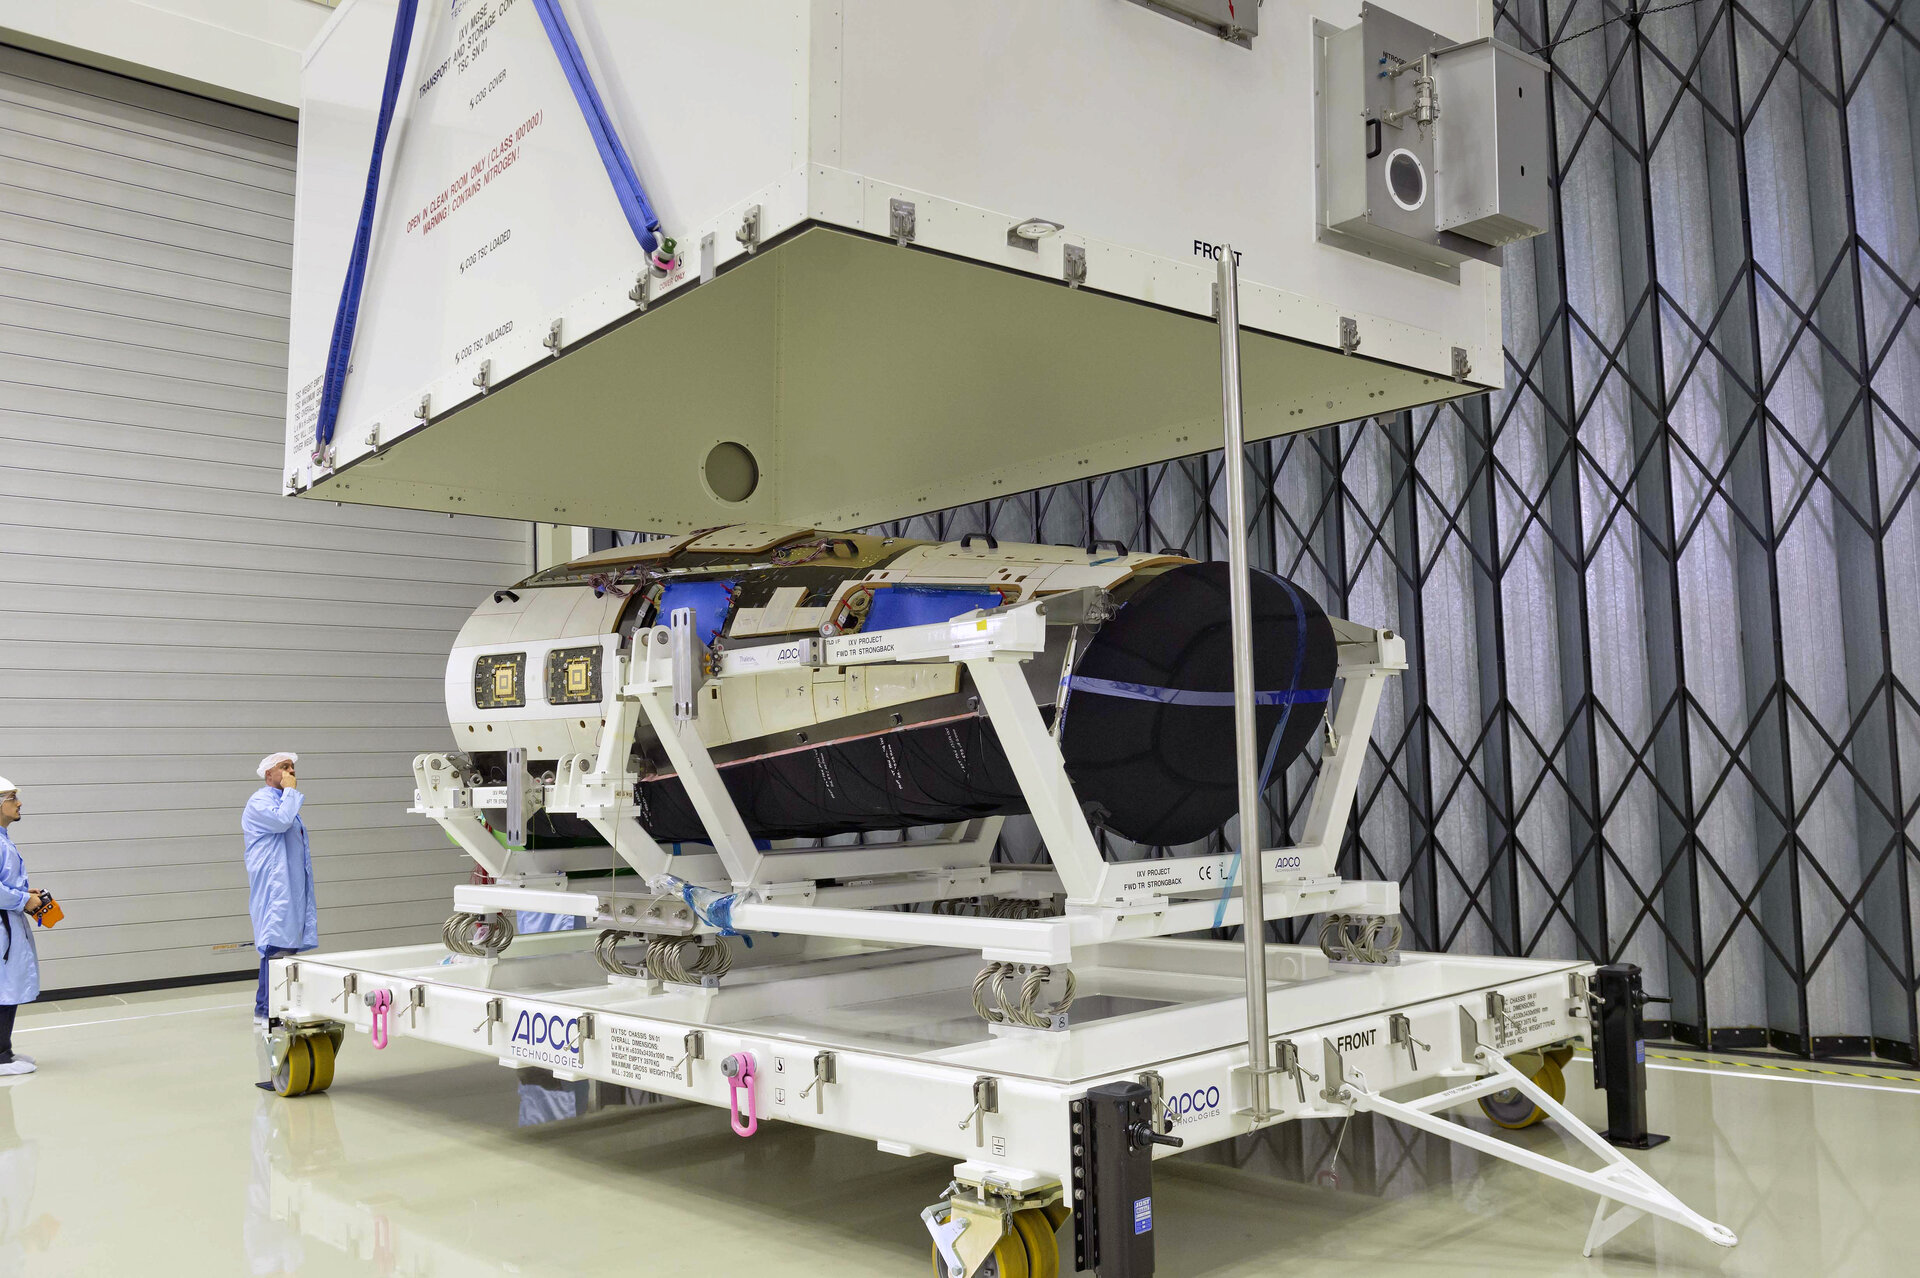 ESA's ruimtevliegtuig IXV: Intermediate eXperimental Vehicle